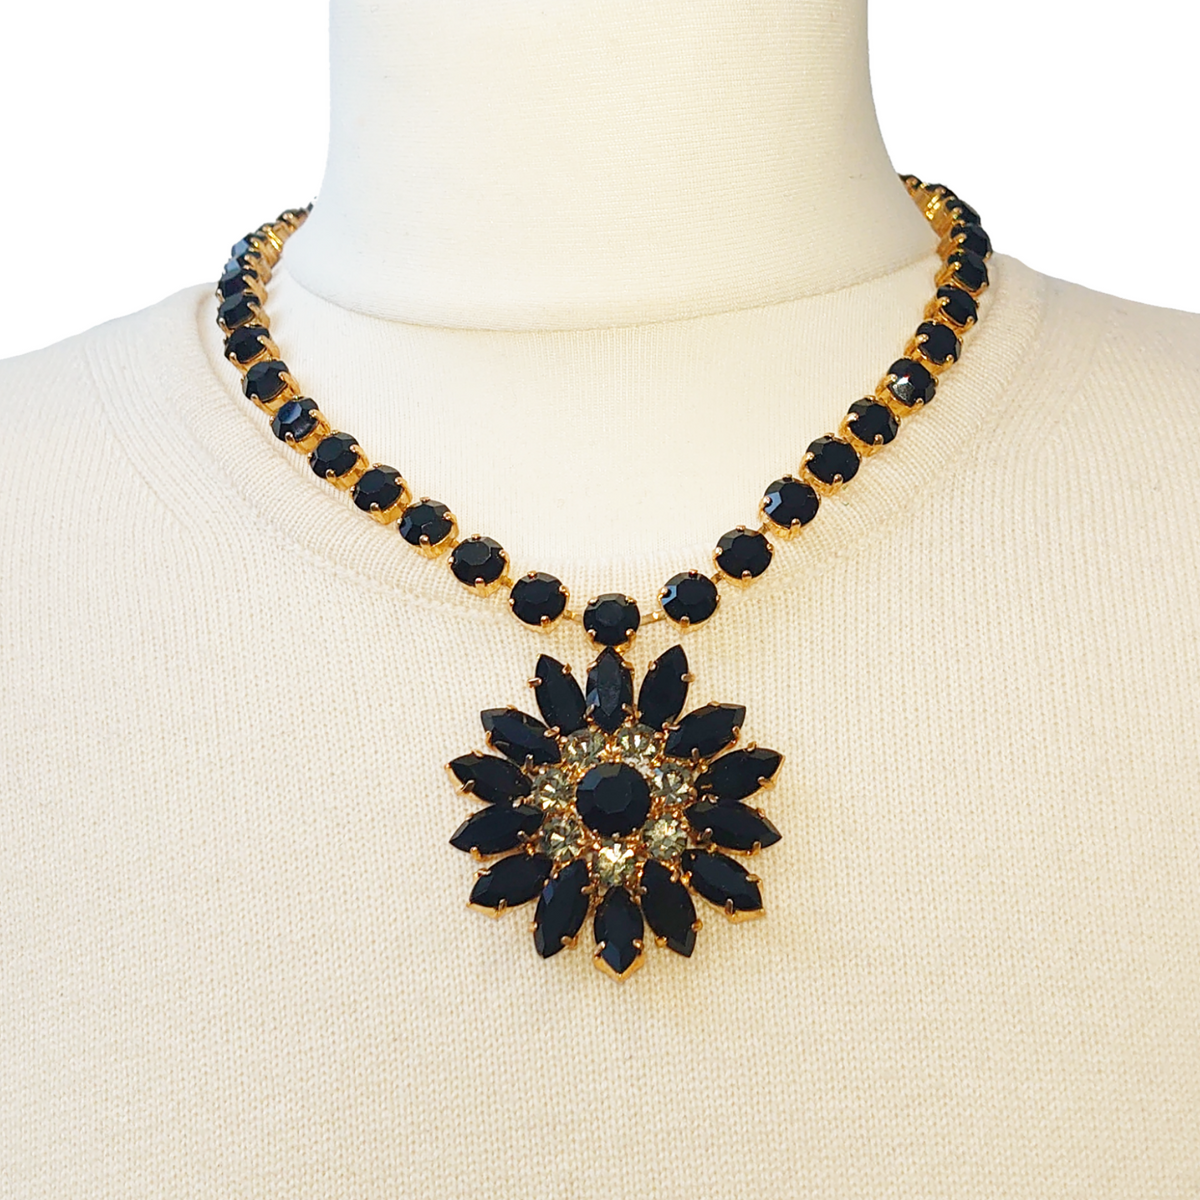 Bespoke Black Starflower Necklace - Swarovski Crystals